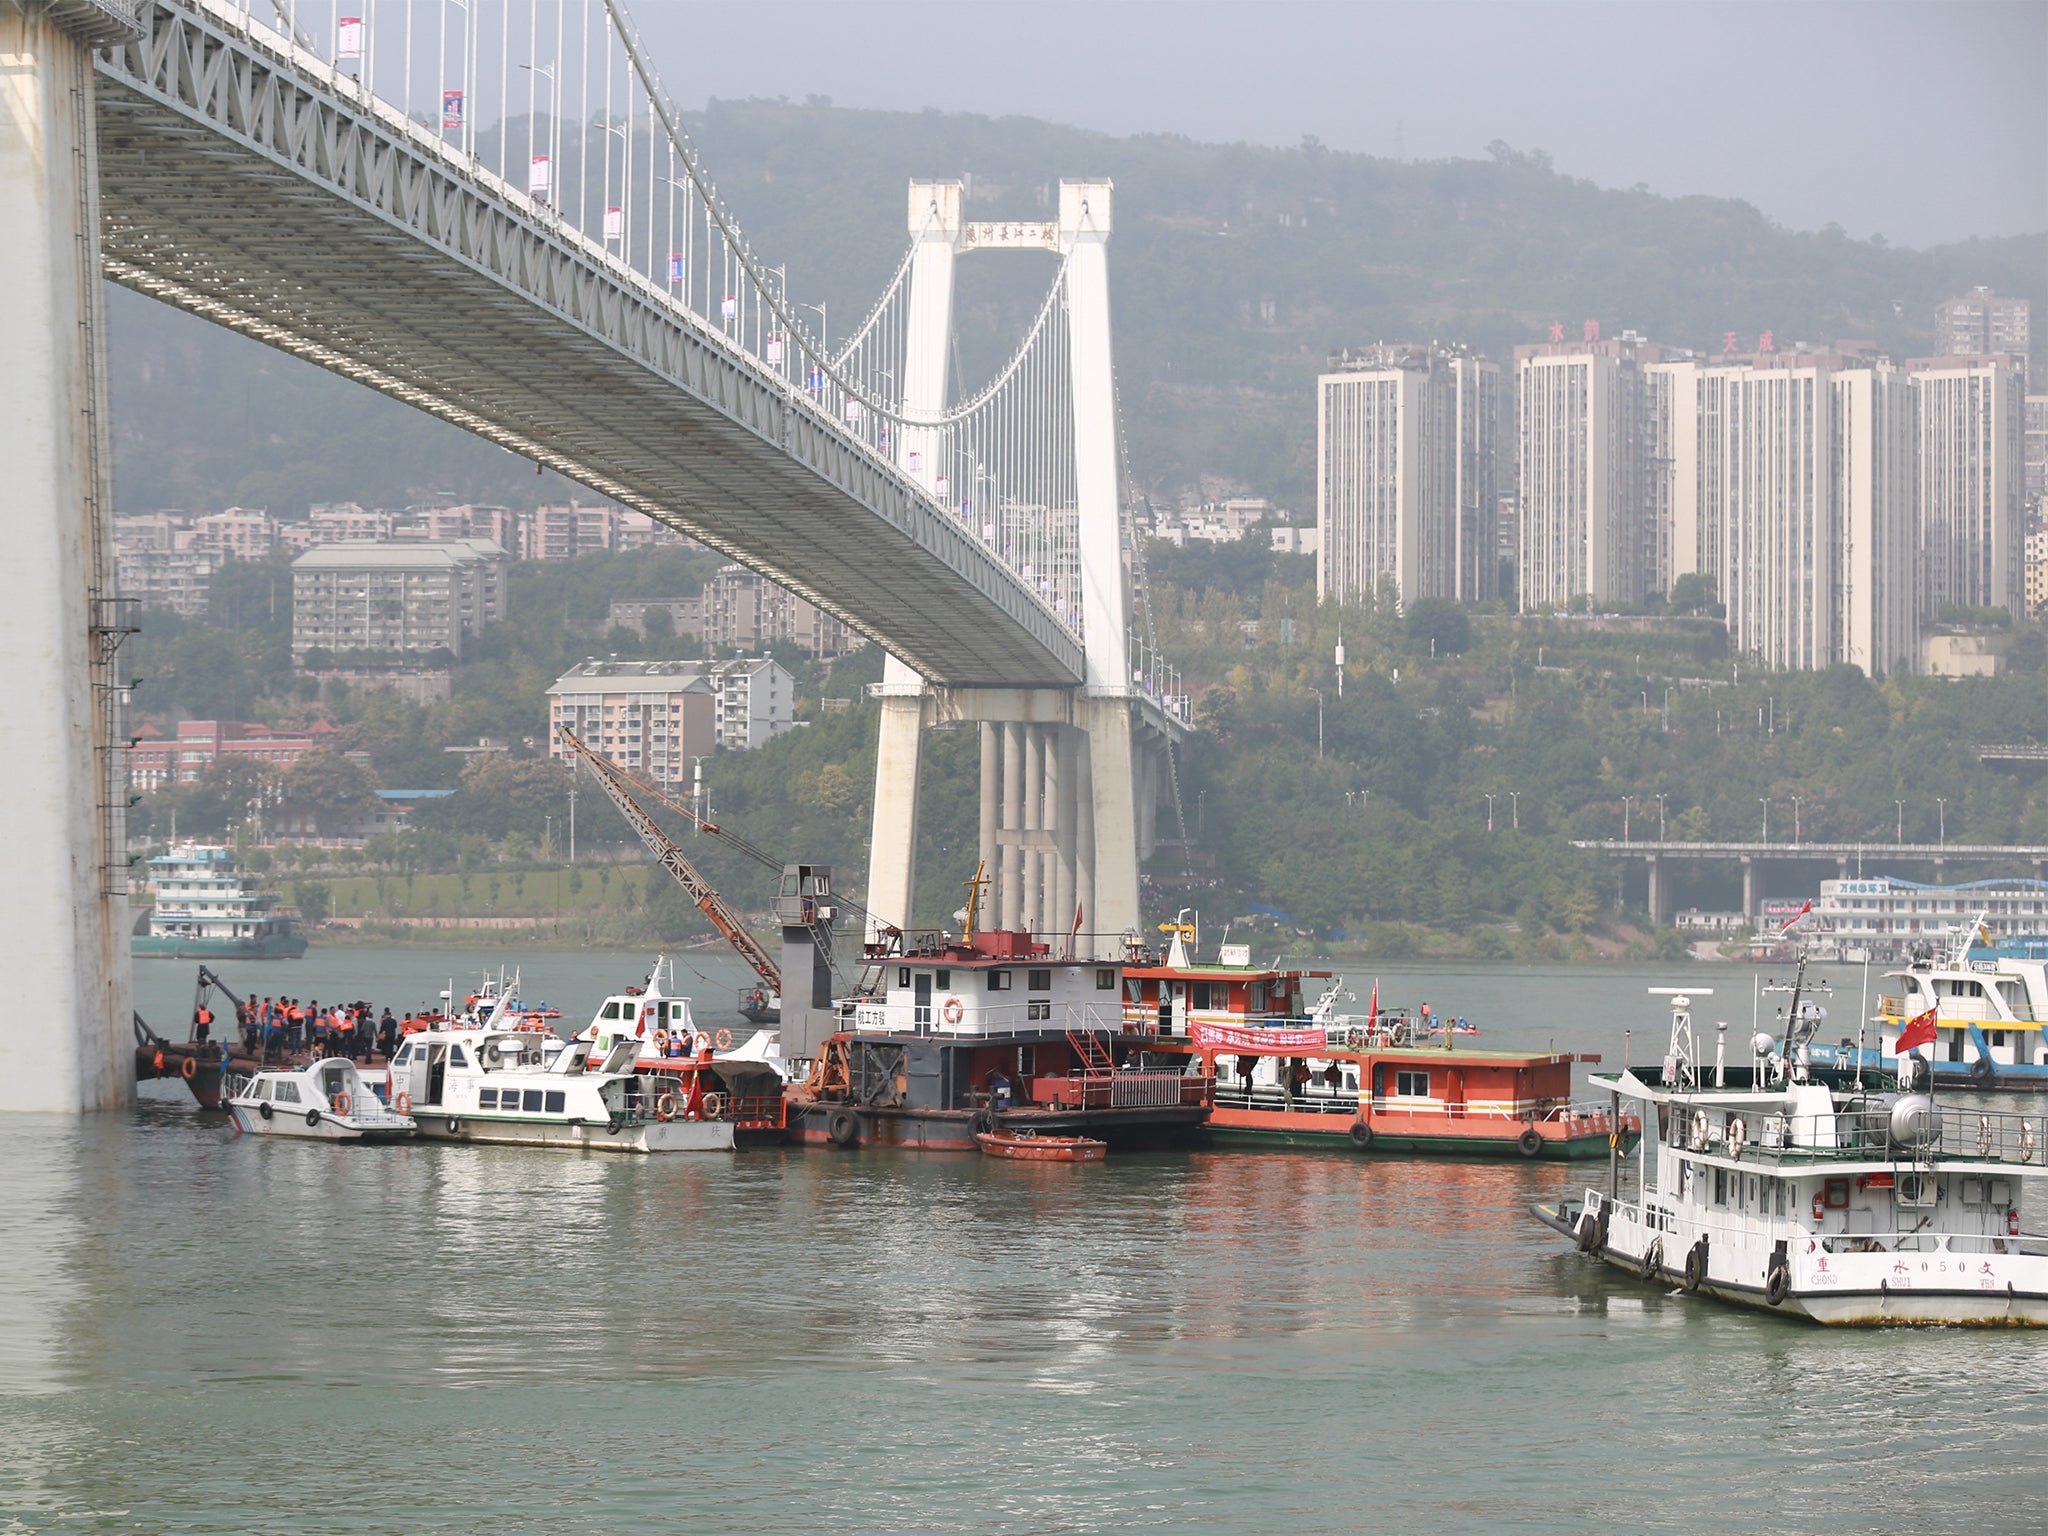 The rescue operation under the bridge on the Yangtze river